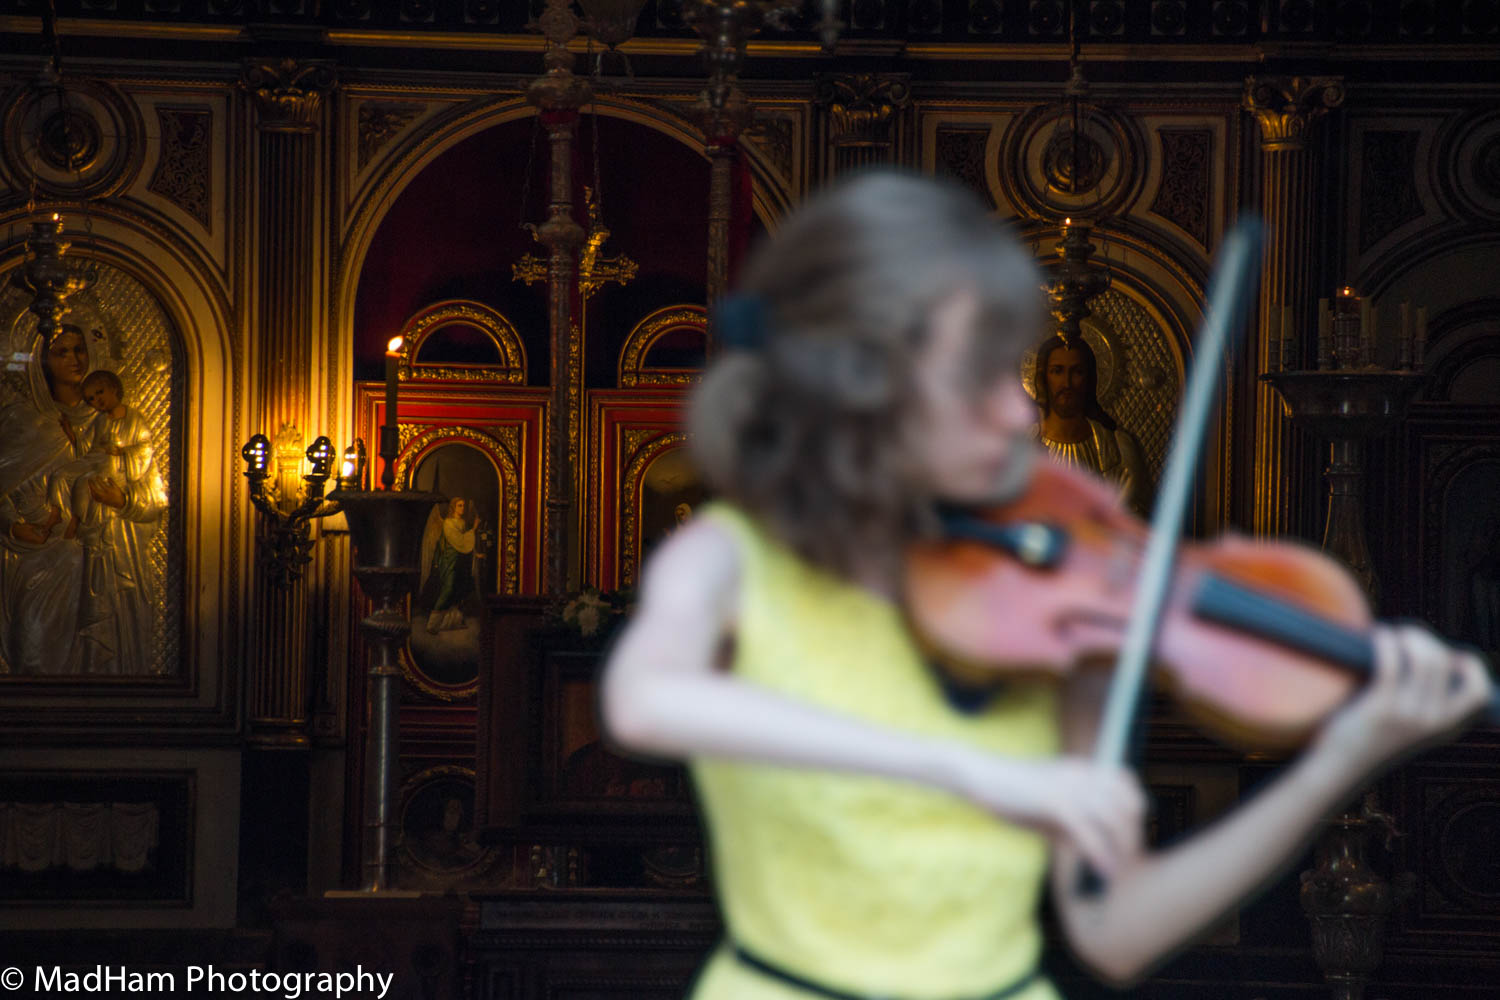 Blurred Violinist